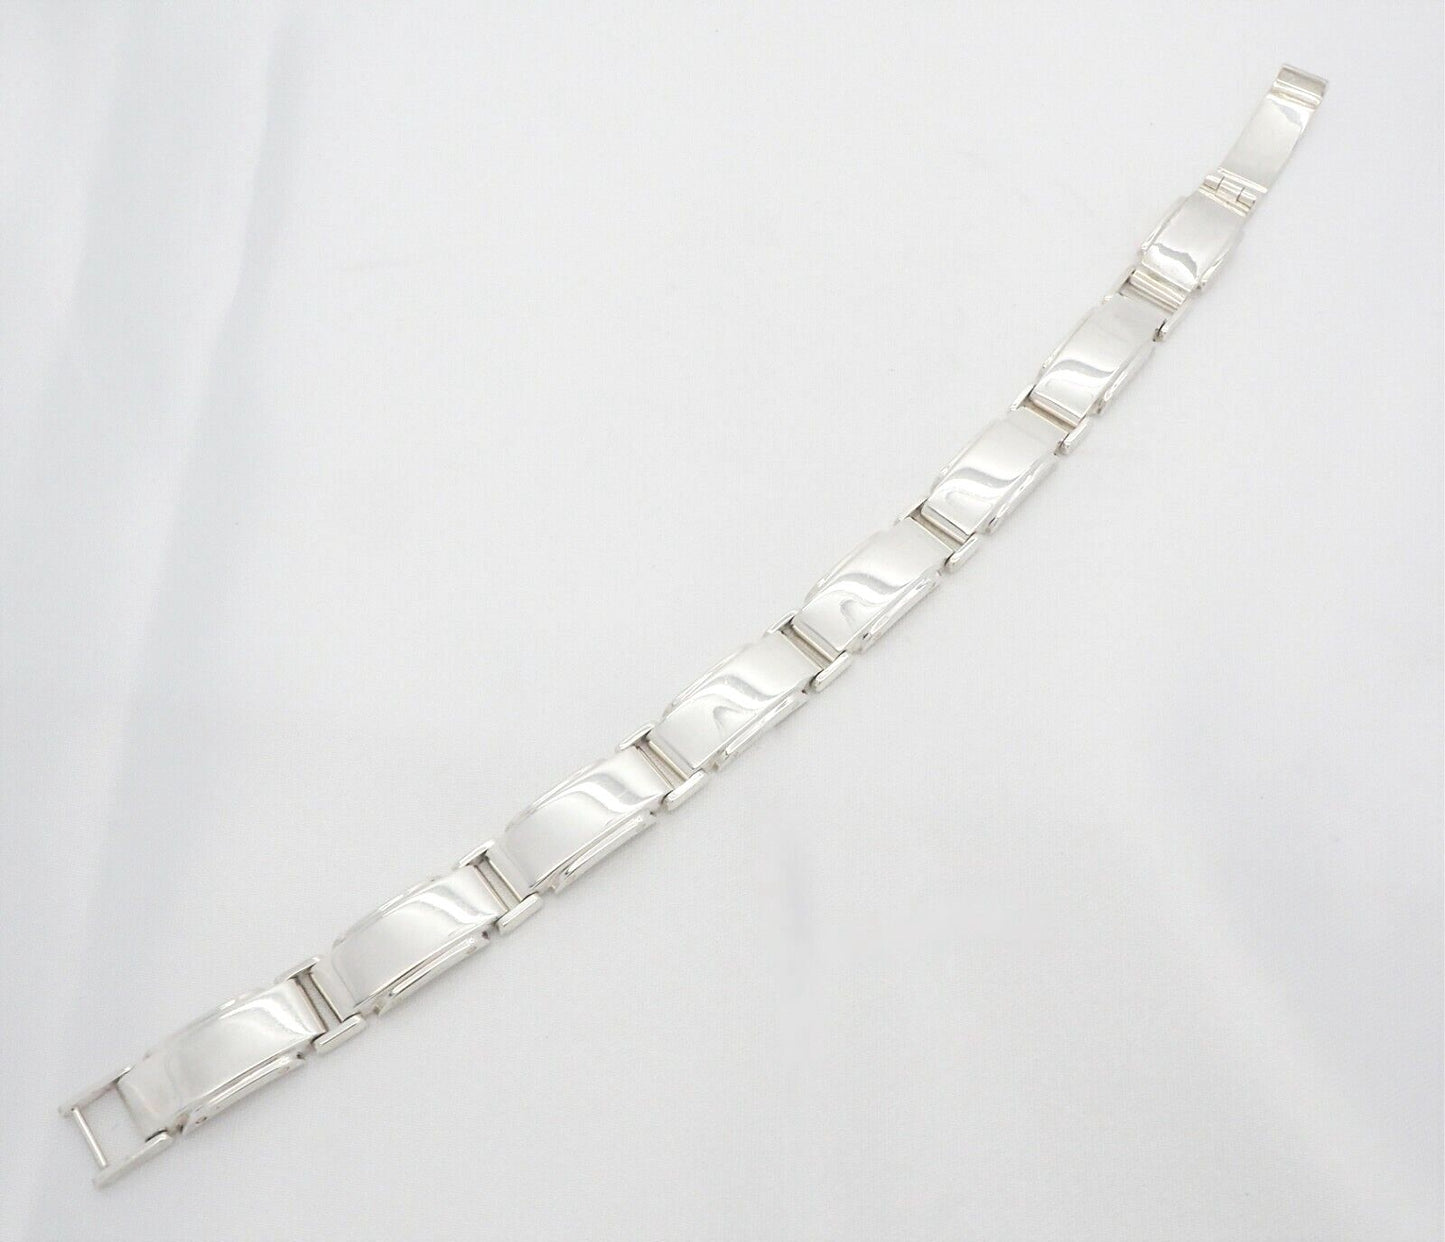 Tiffany & Co. Sterling Silver Smooth Bracelet, Length 8.25" - 59.3g